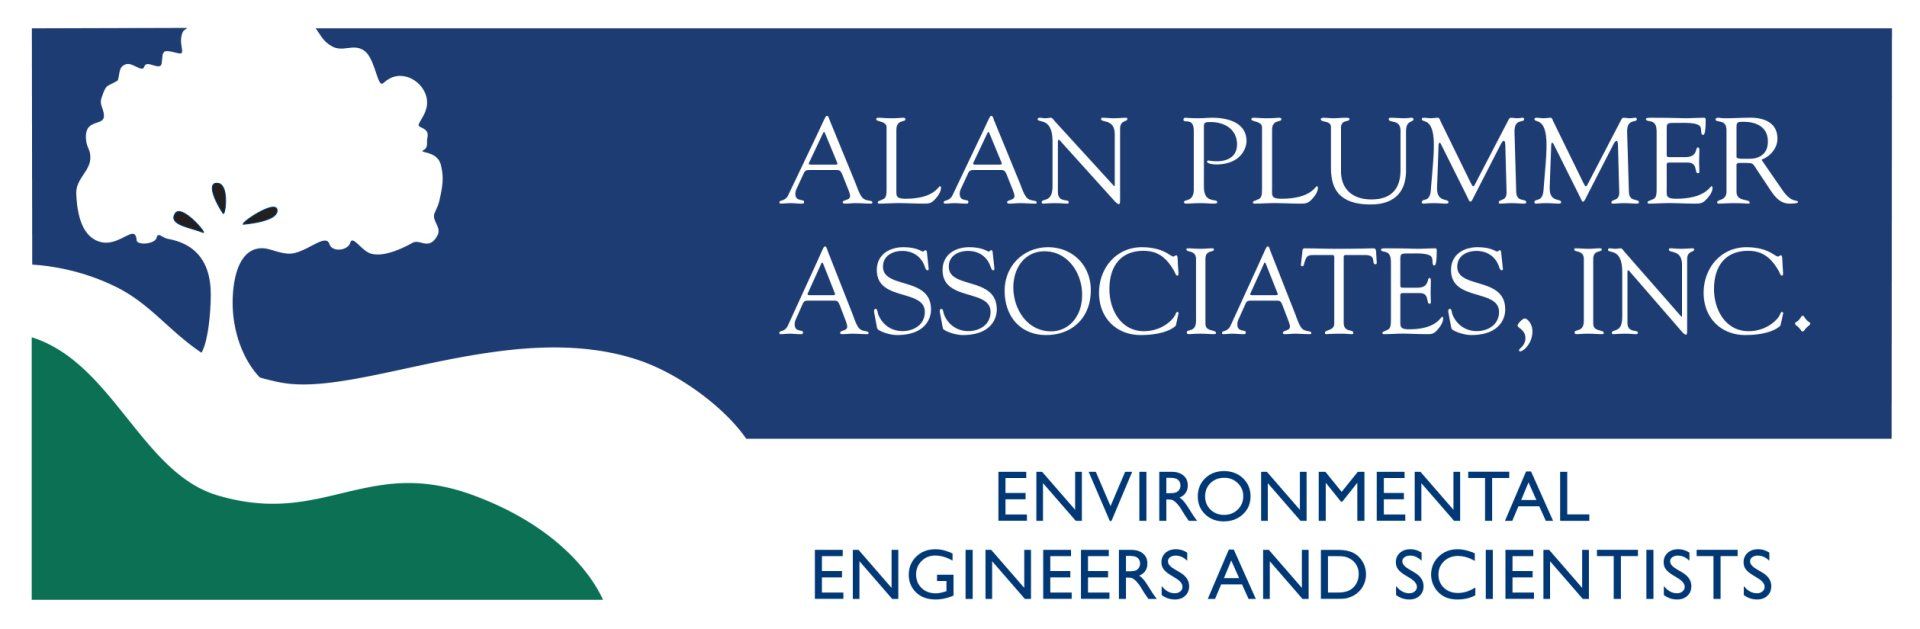 Alan Plummer Associates Inc logo